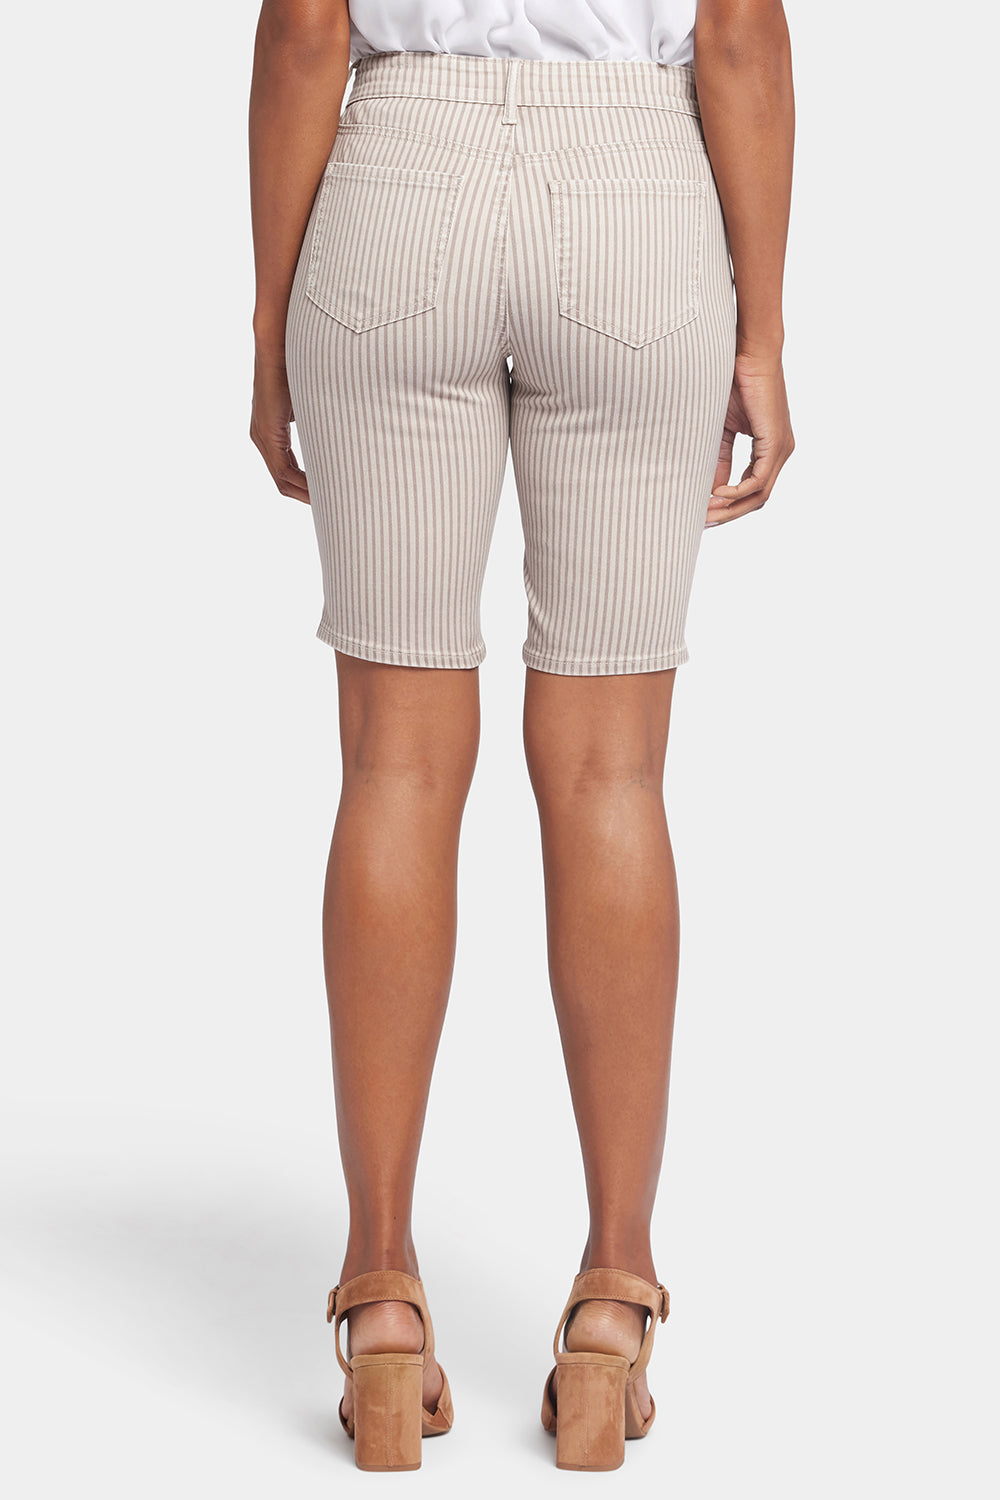 NYDJ Briella 11 Inch Denim Shorts  - Sandbar Stripe